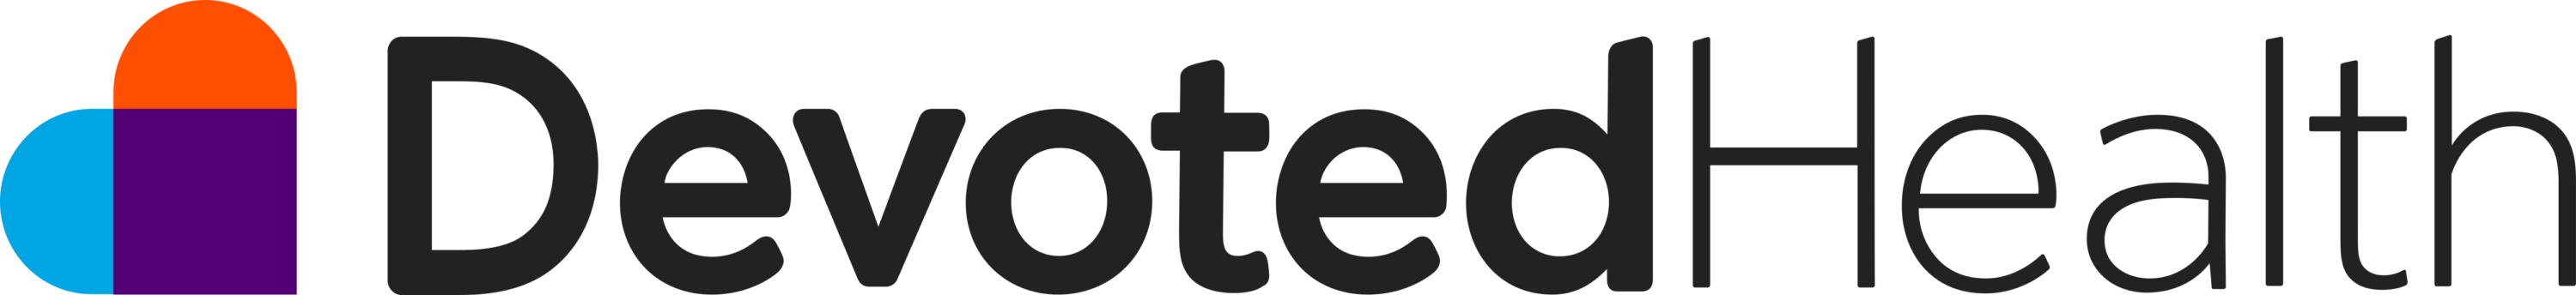 Devoted Health Logo